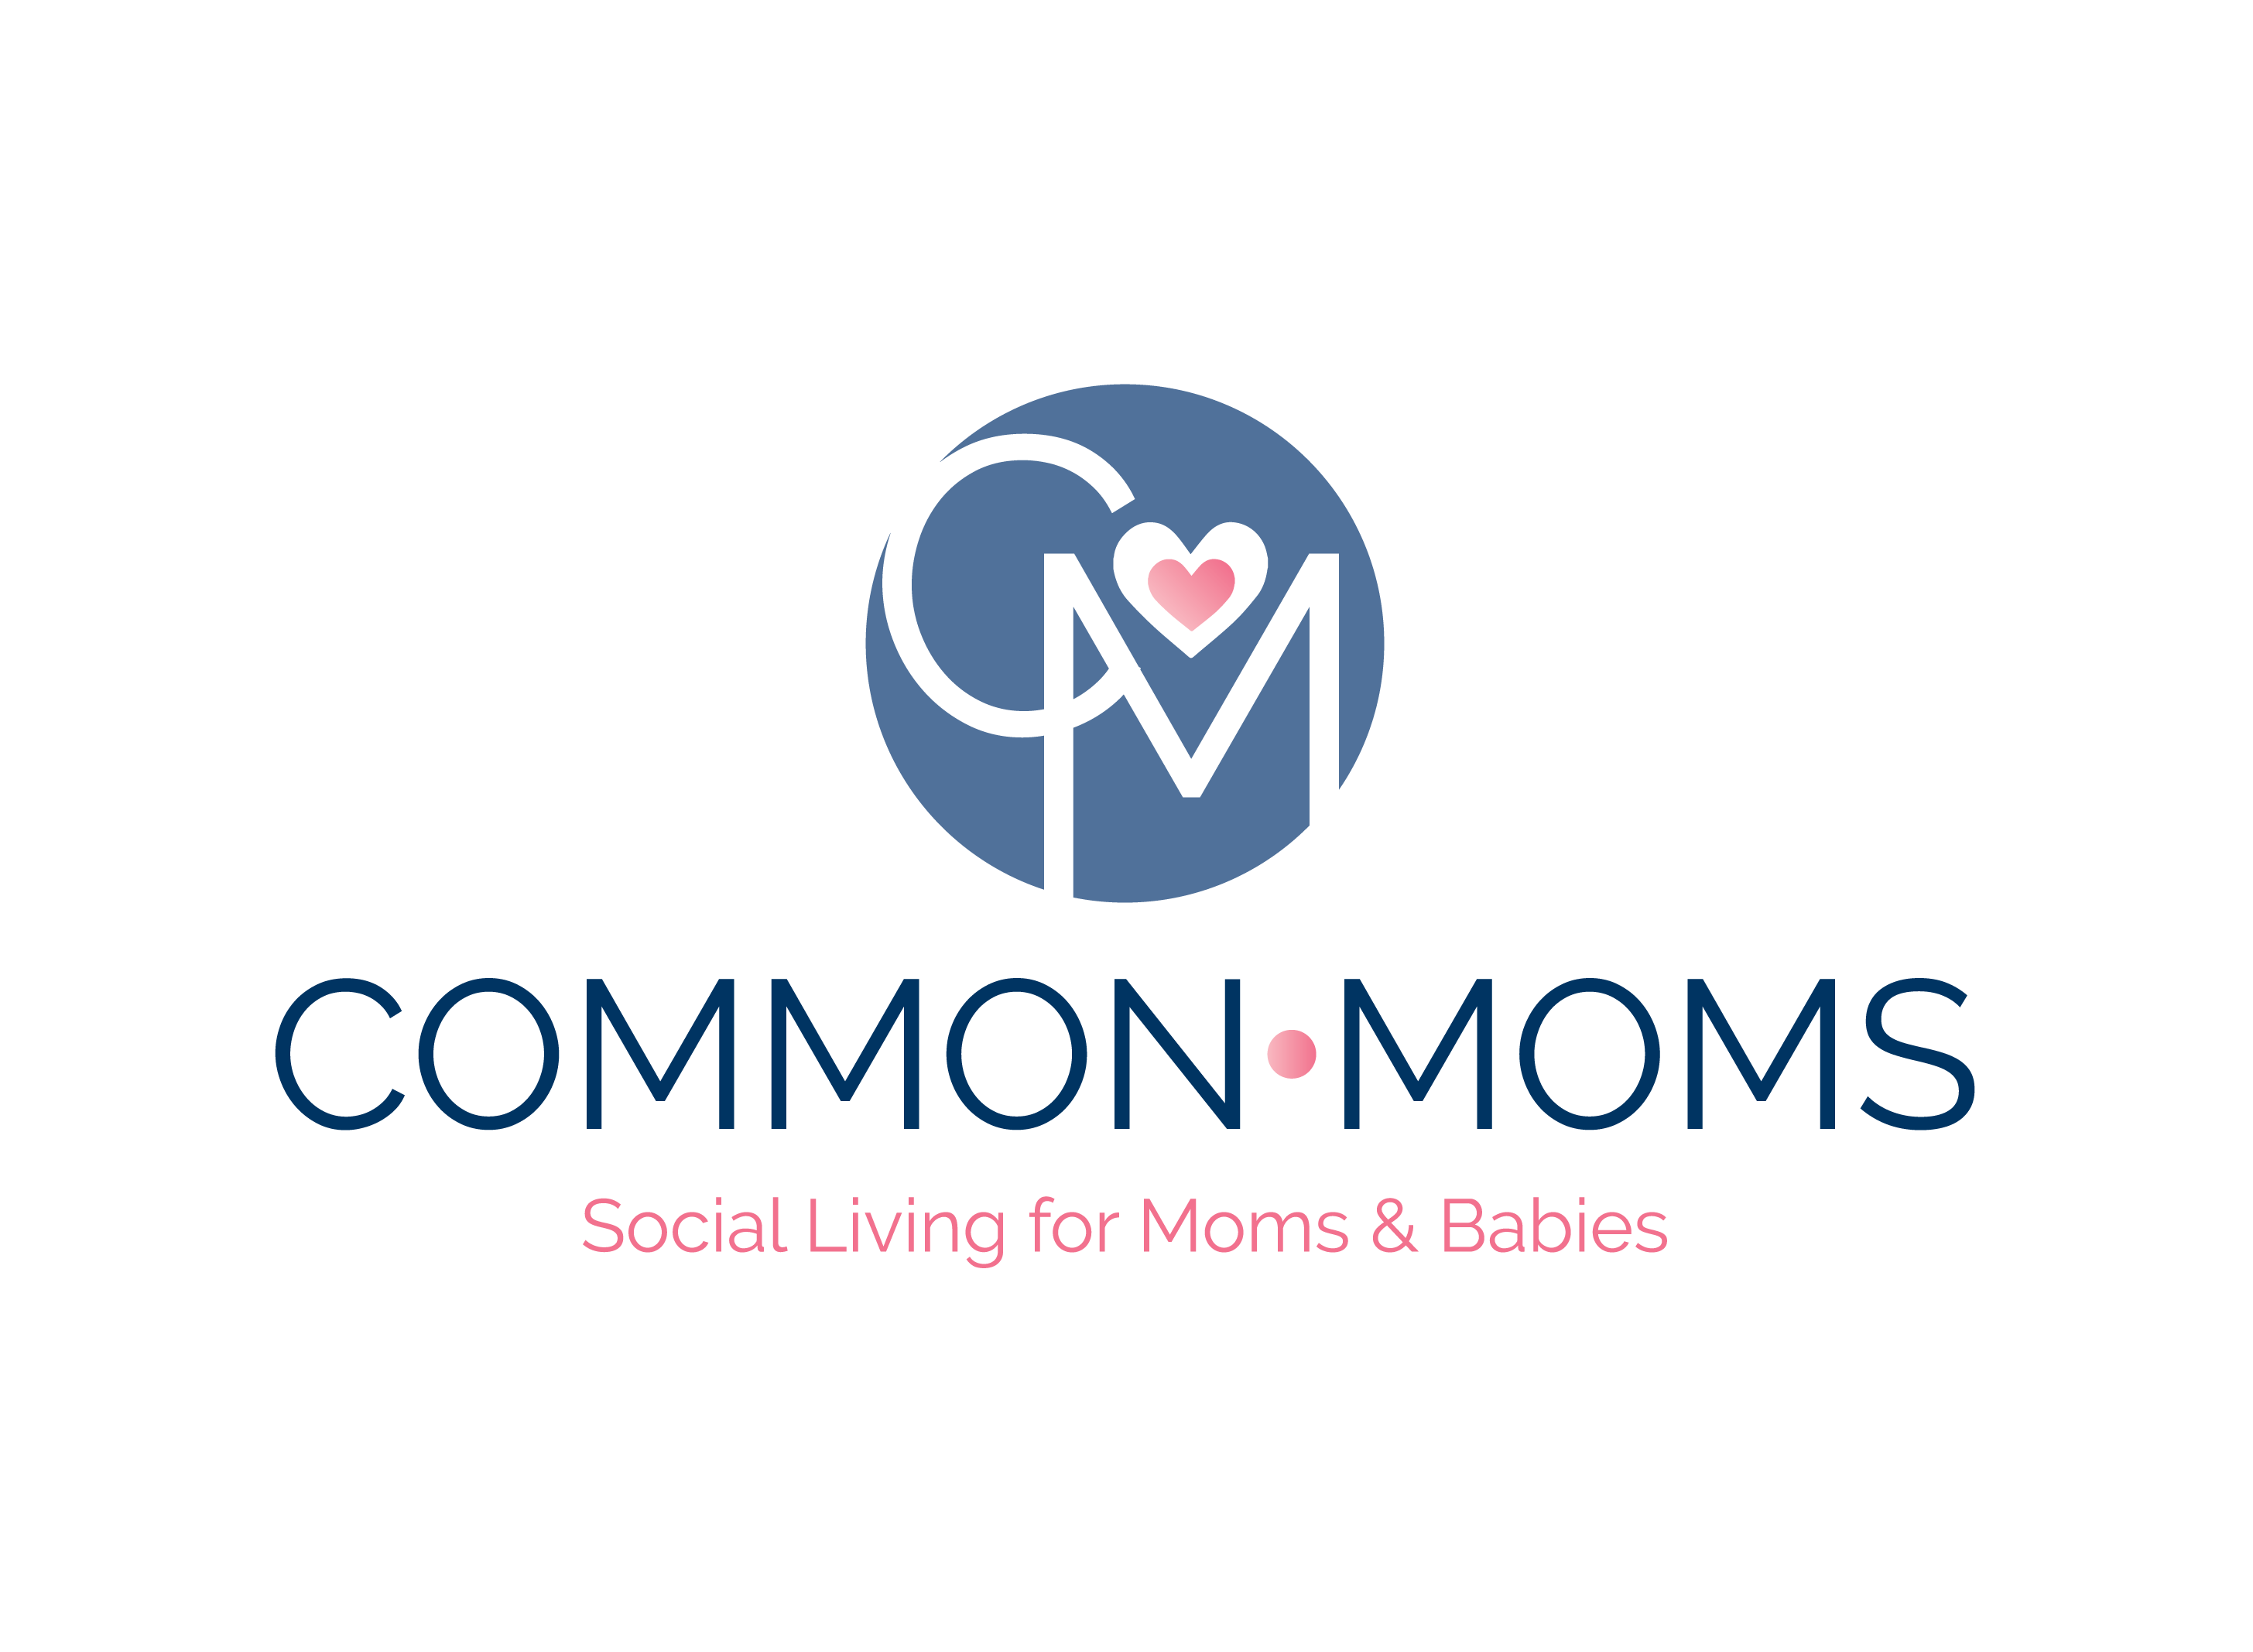 Social Living for Moms & Babies - Common Moms